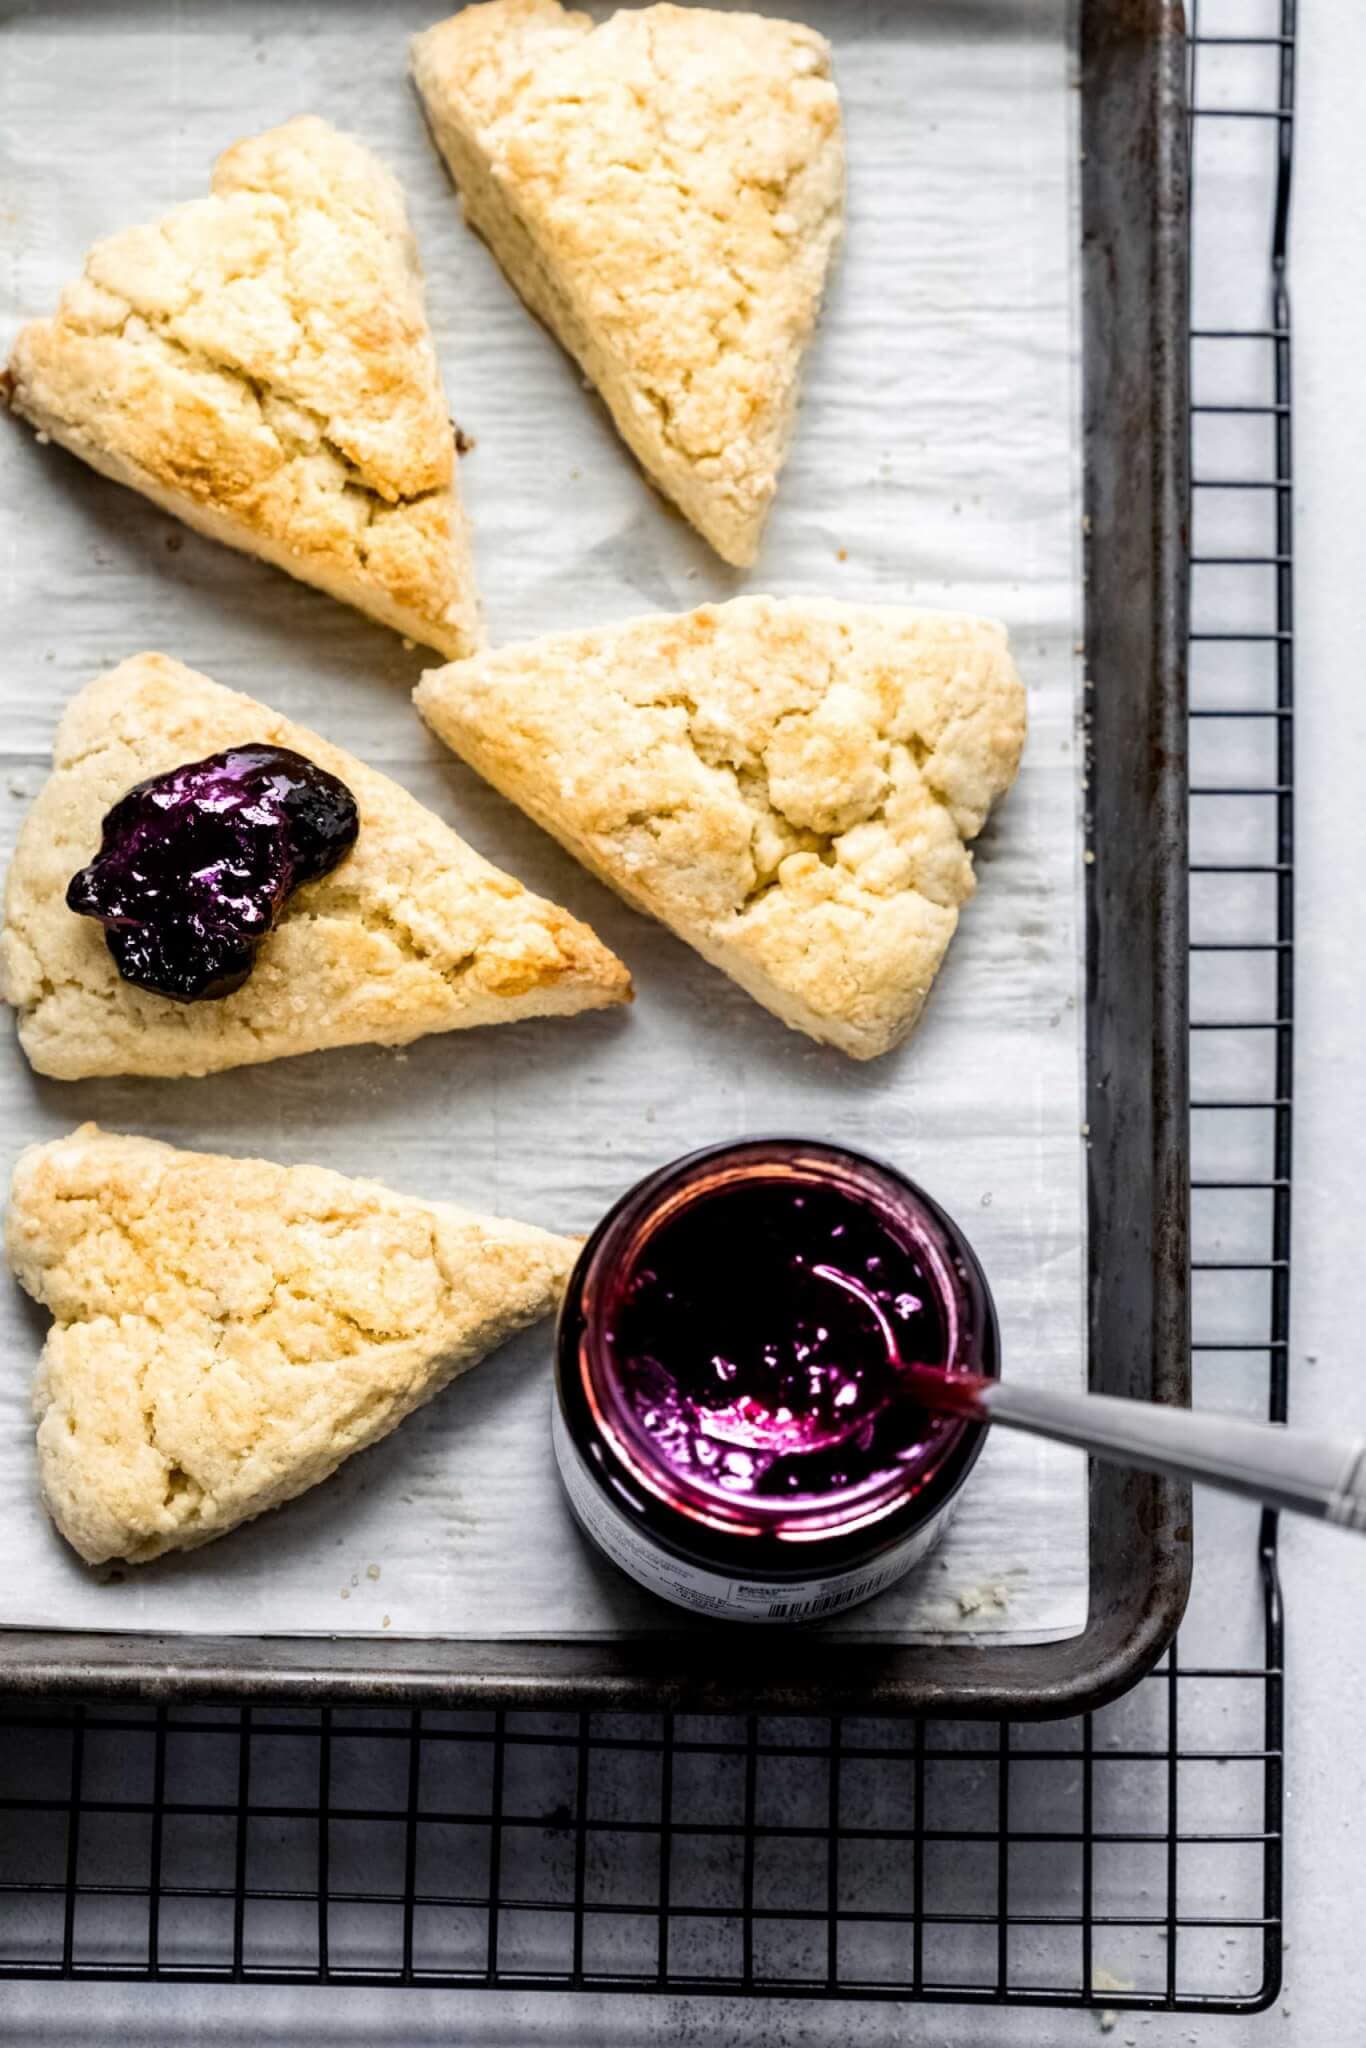 Cream scones on baking sheet next to jar of blackberry jam.